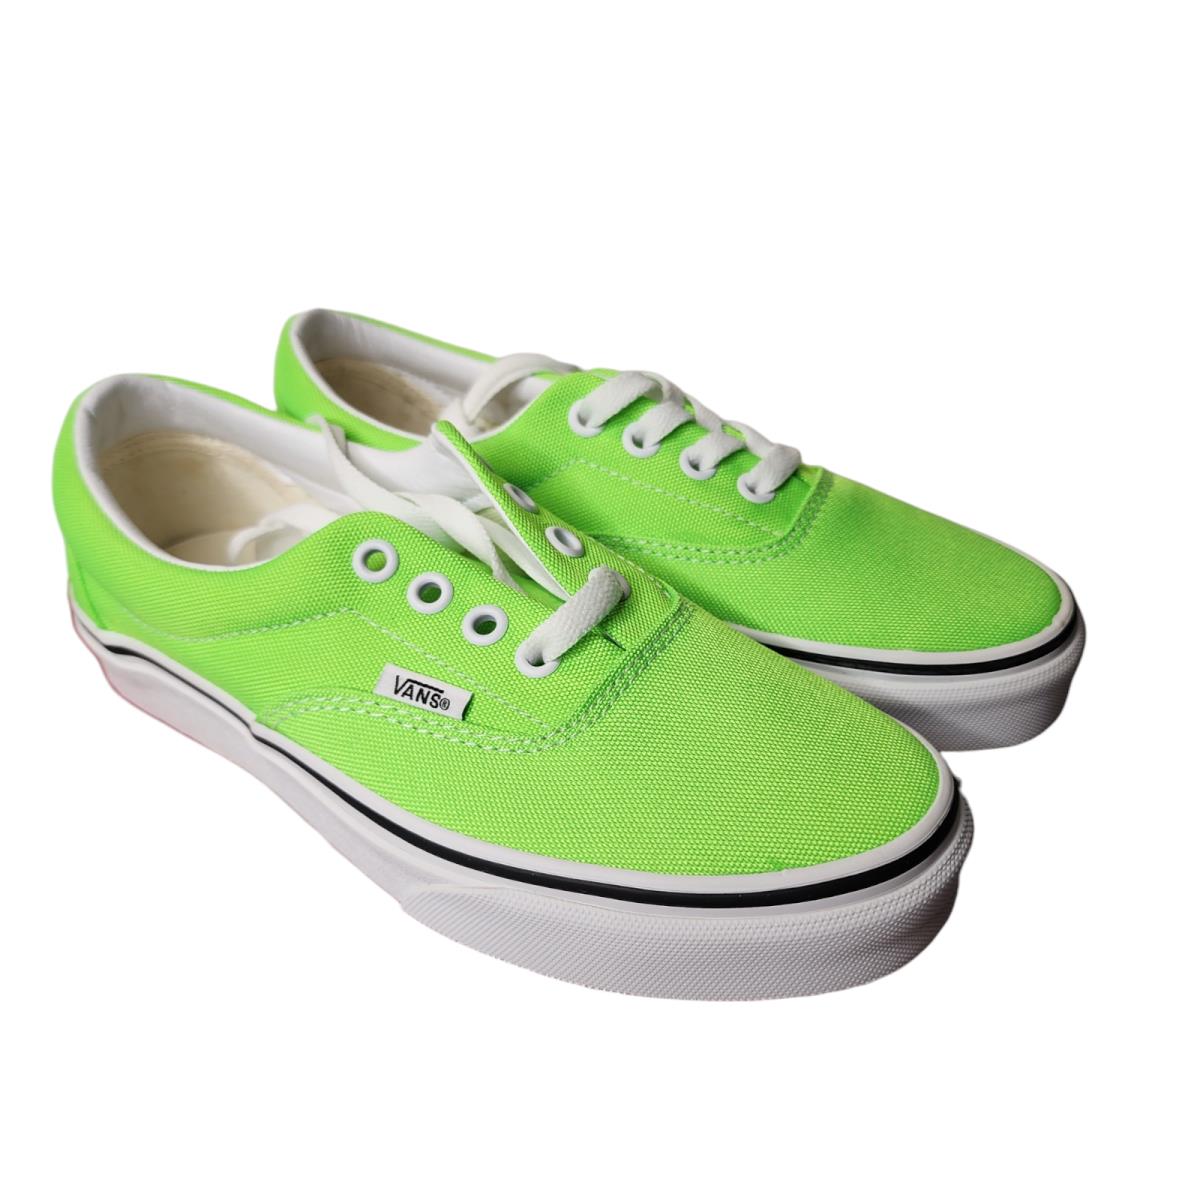 Vans Era Classic Sneakers Unisex Canvas Shoes Men`s/women`s Size 4.0/5.5 - Green Gecko (Neon)